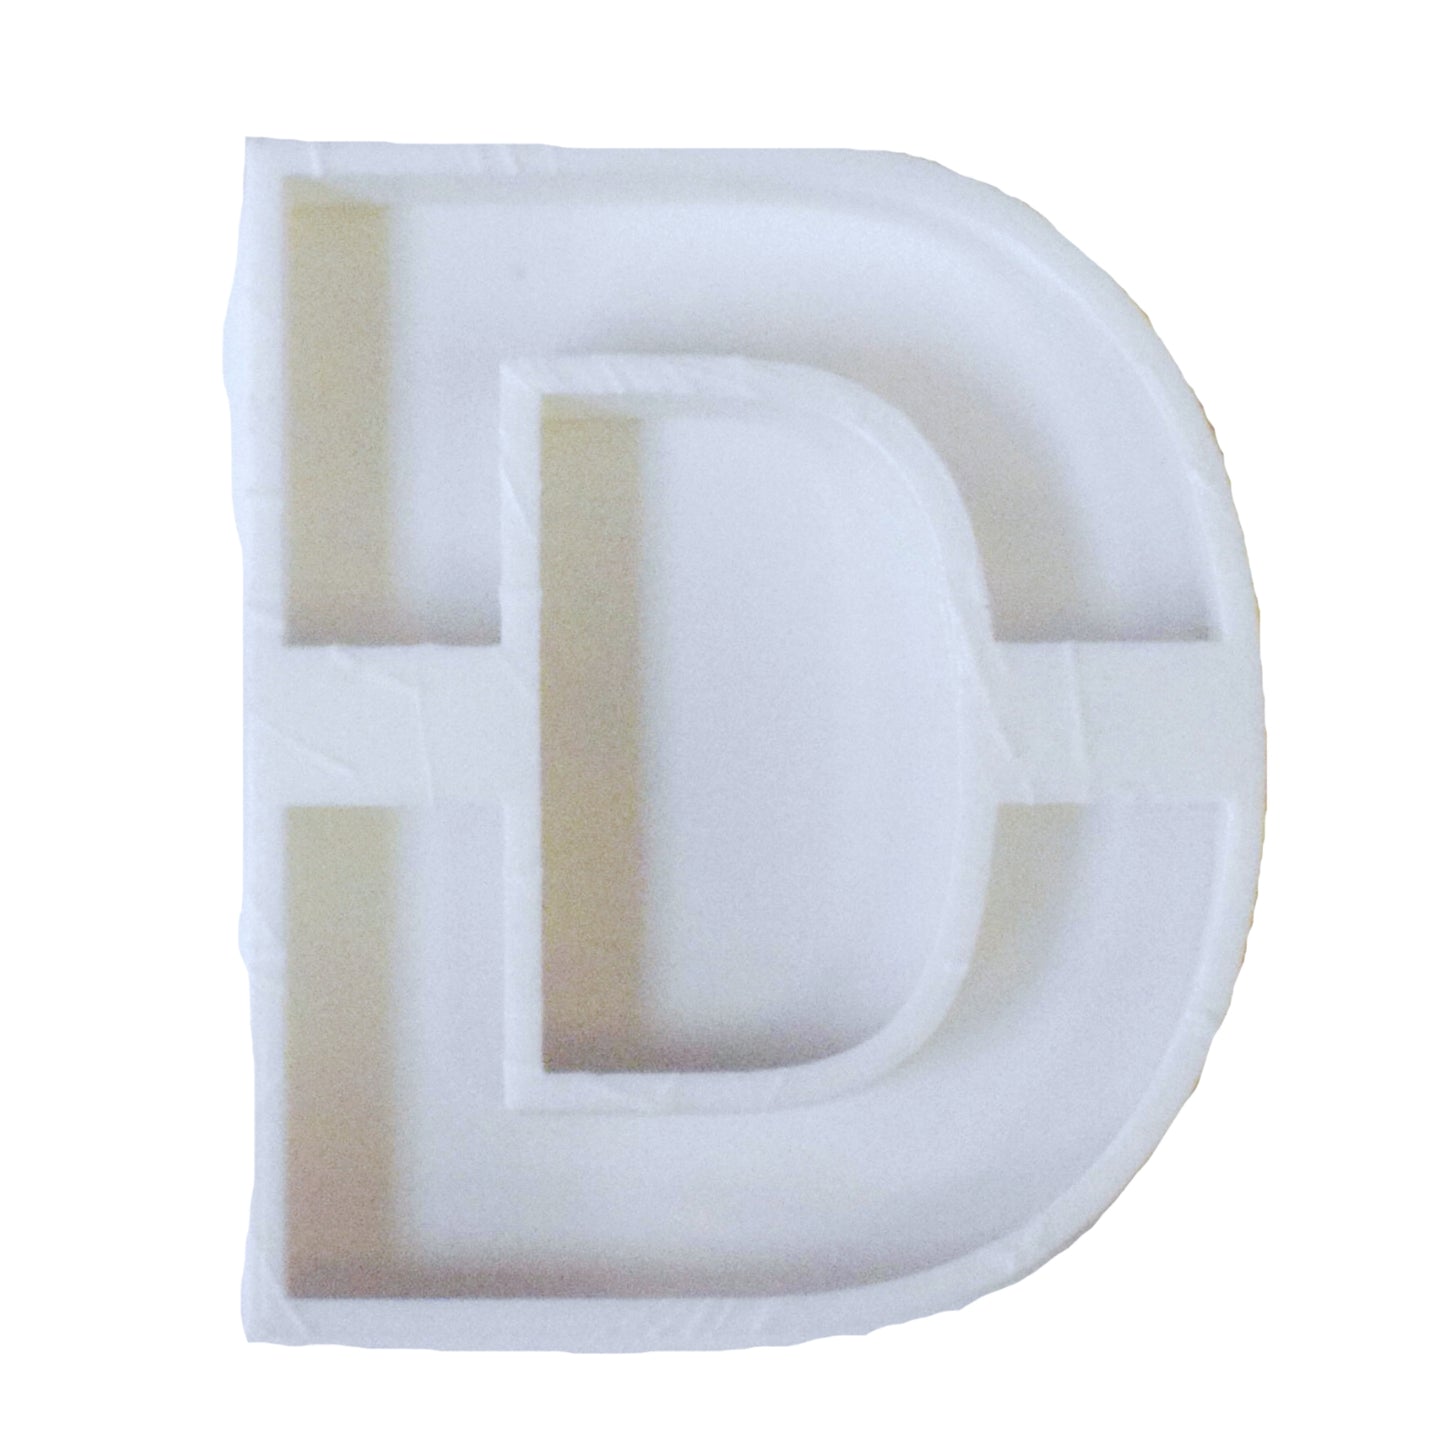 Letter D Initial Alphabet Letters Cookie Cutter Baking Tool USA PR107D